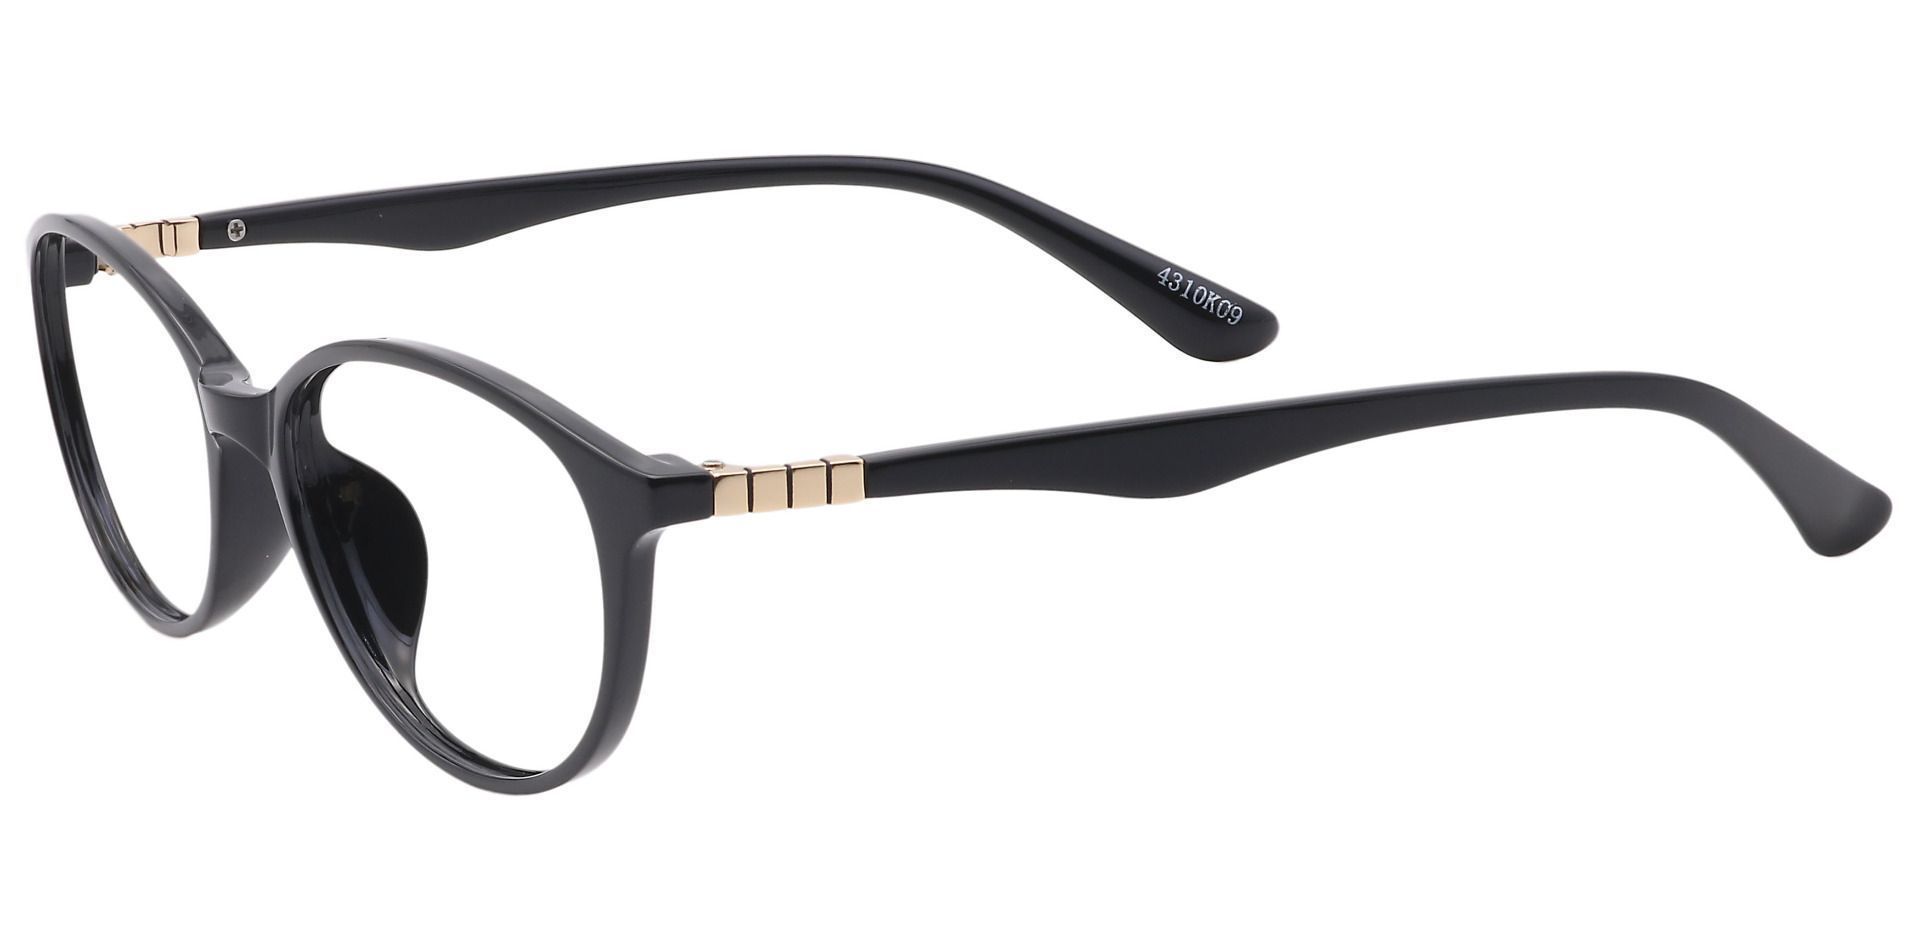 Vann Oval Eyeglasses Frame - Shiny Black/gold Accents